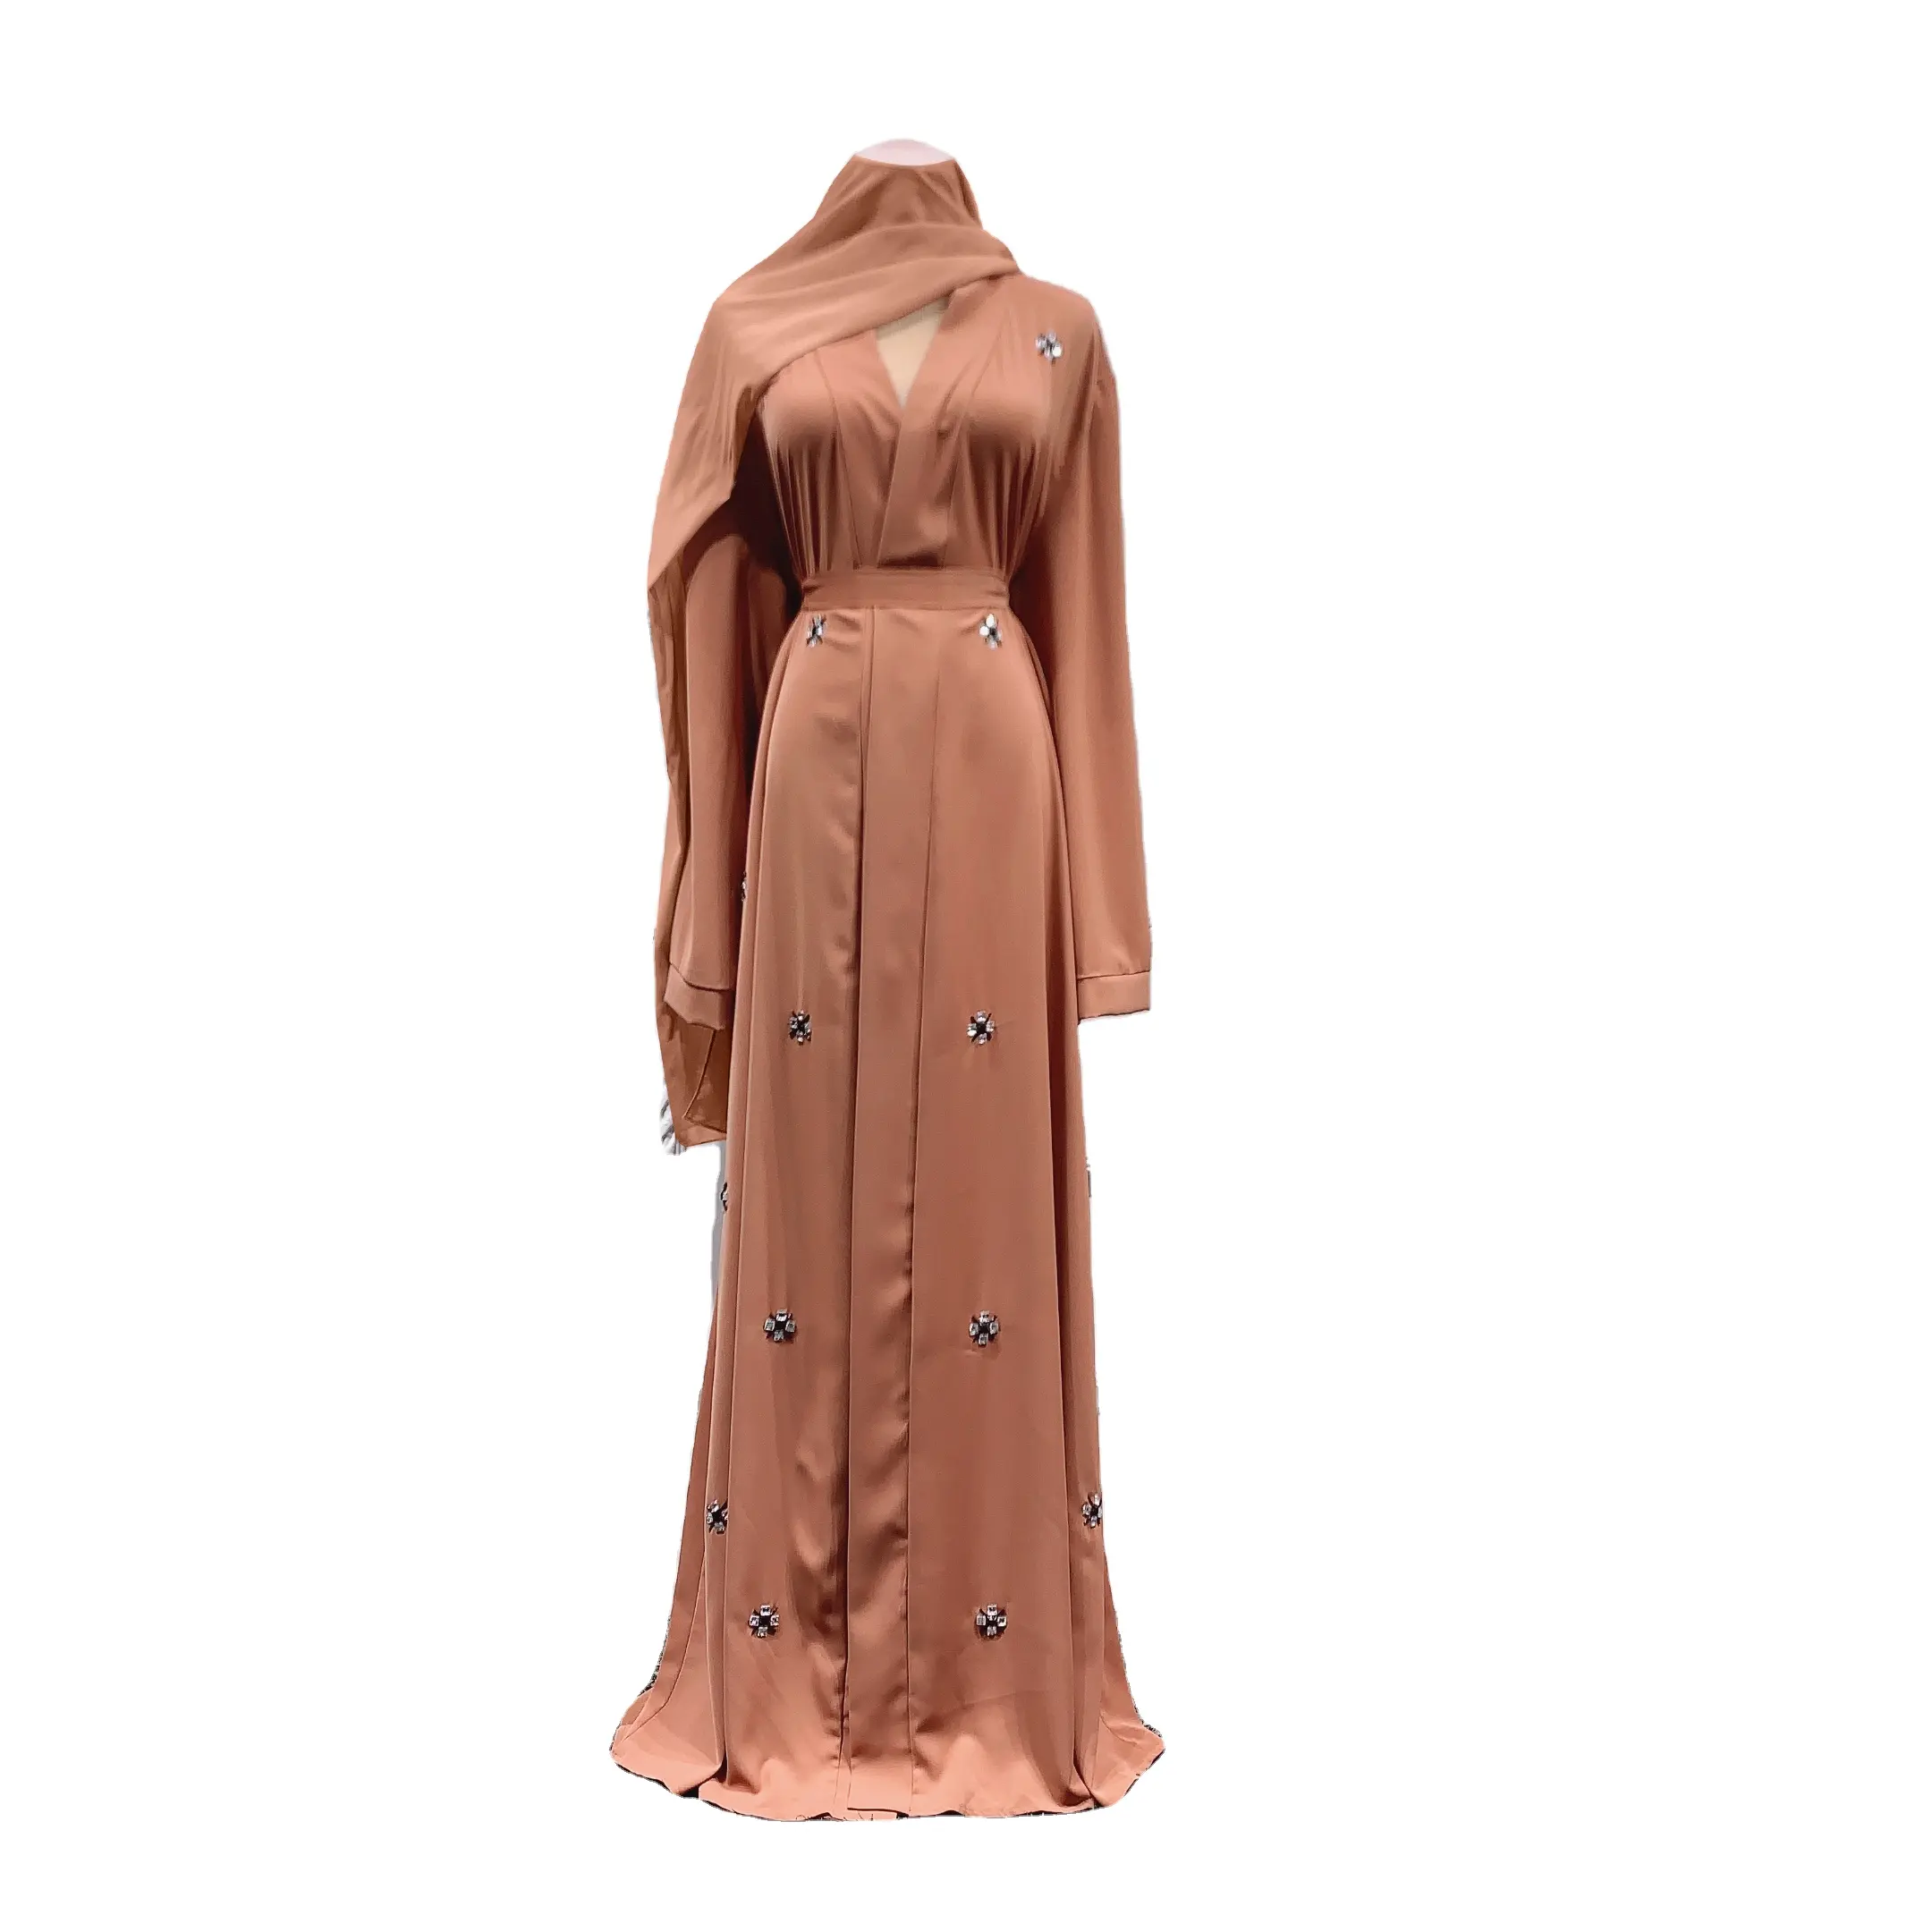 2022Traditional muslim clothing Islamic women's clothing Abaya dress dress ladies robe chiffon two-color merger fashion